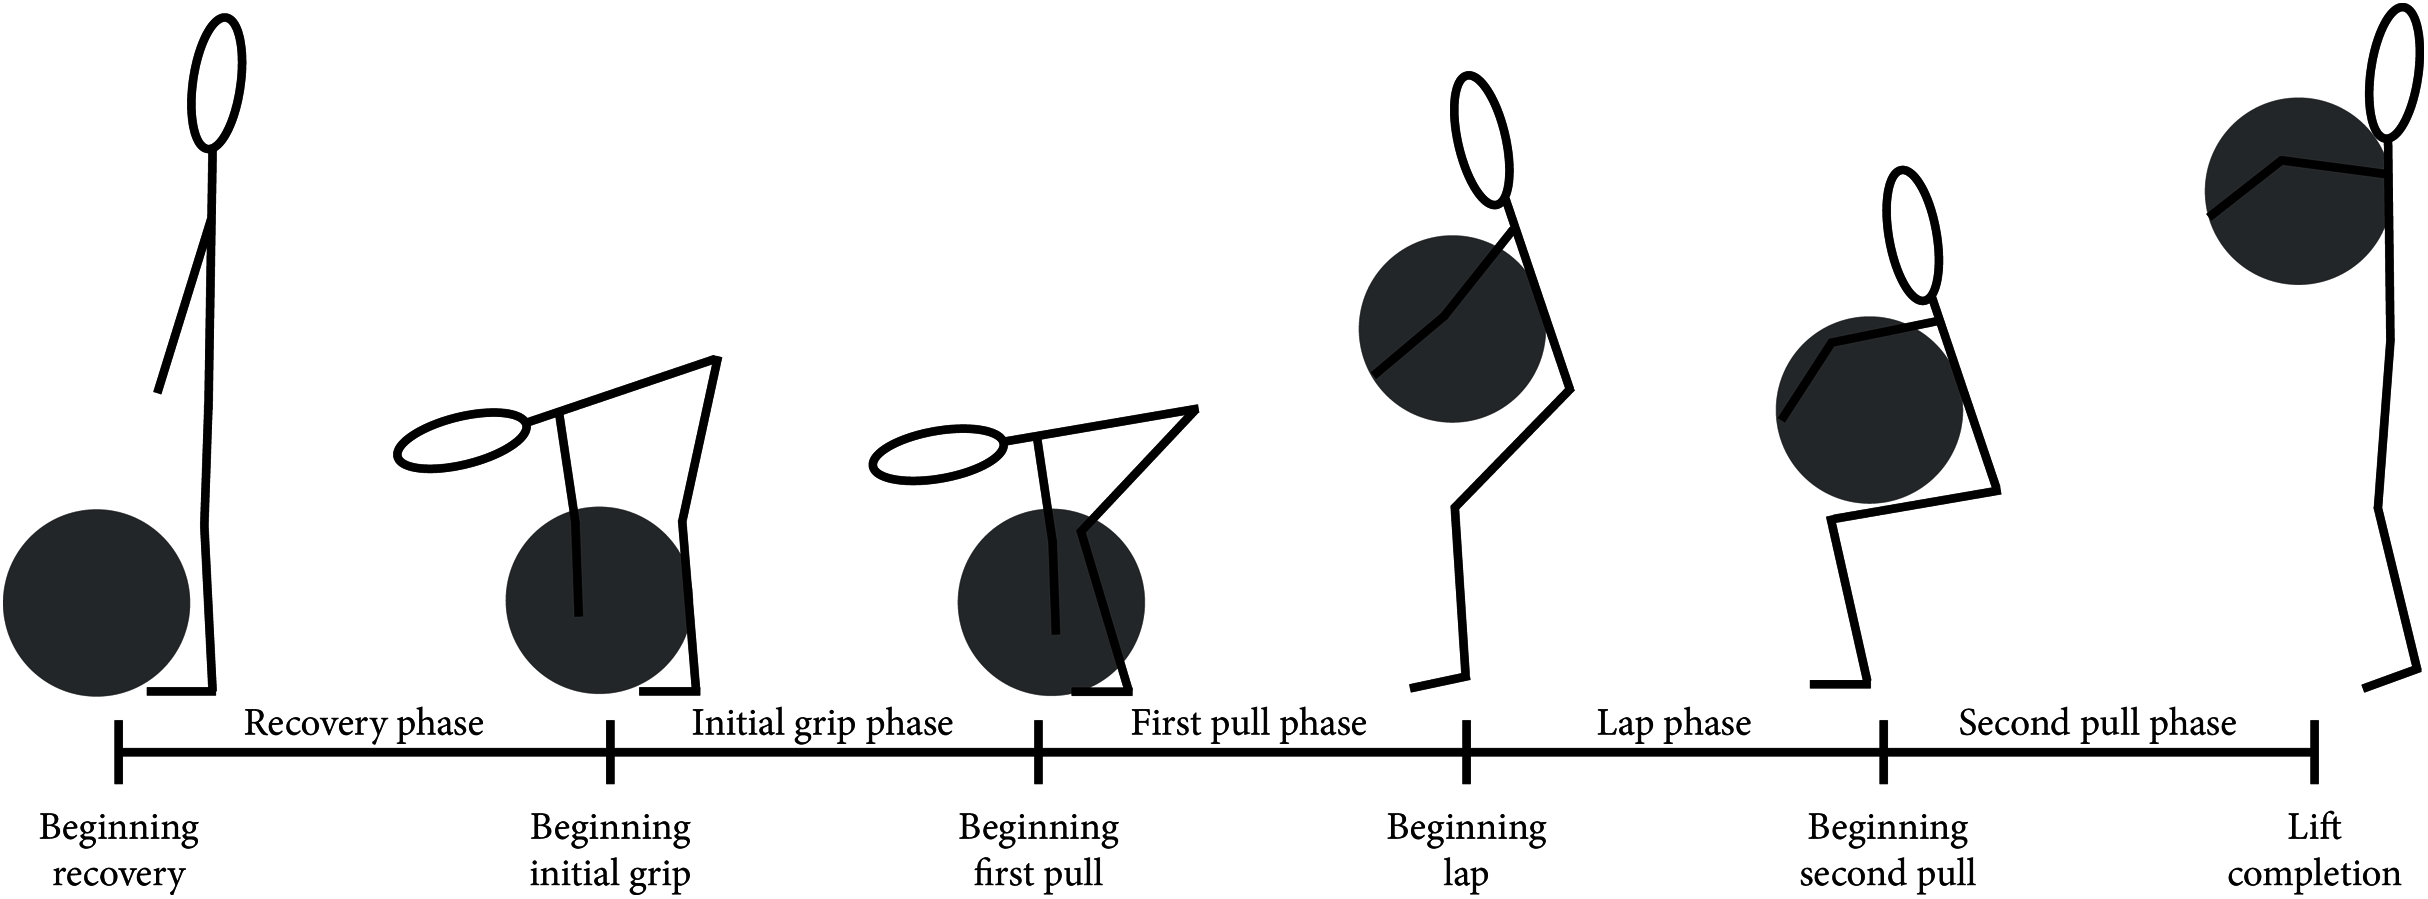 How to Correct Cross-Over Gait (Part 2) - Running Chiropractor - Elite  Sport & Spine